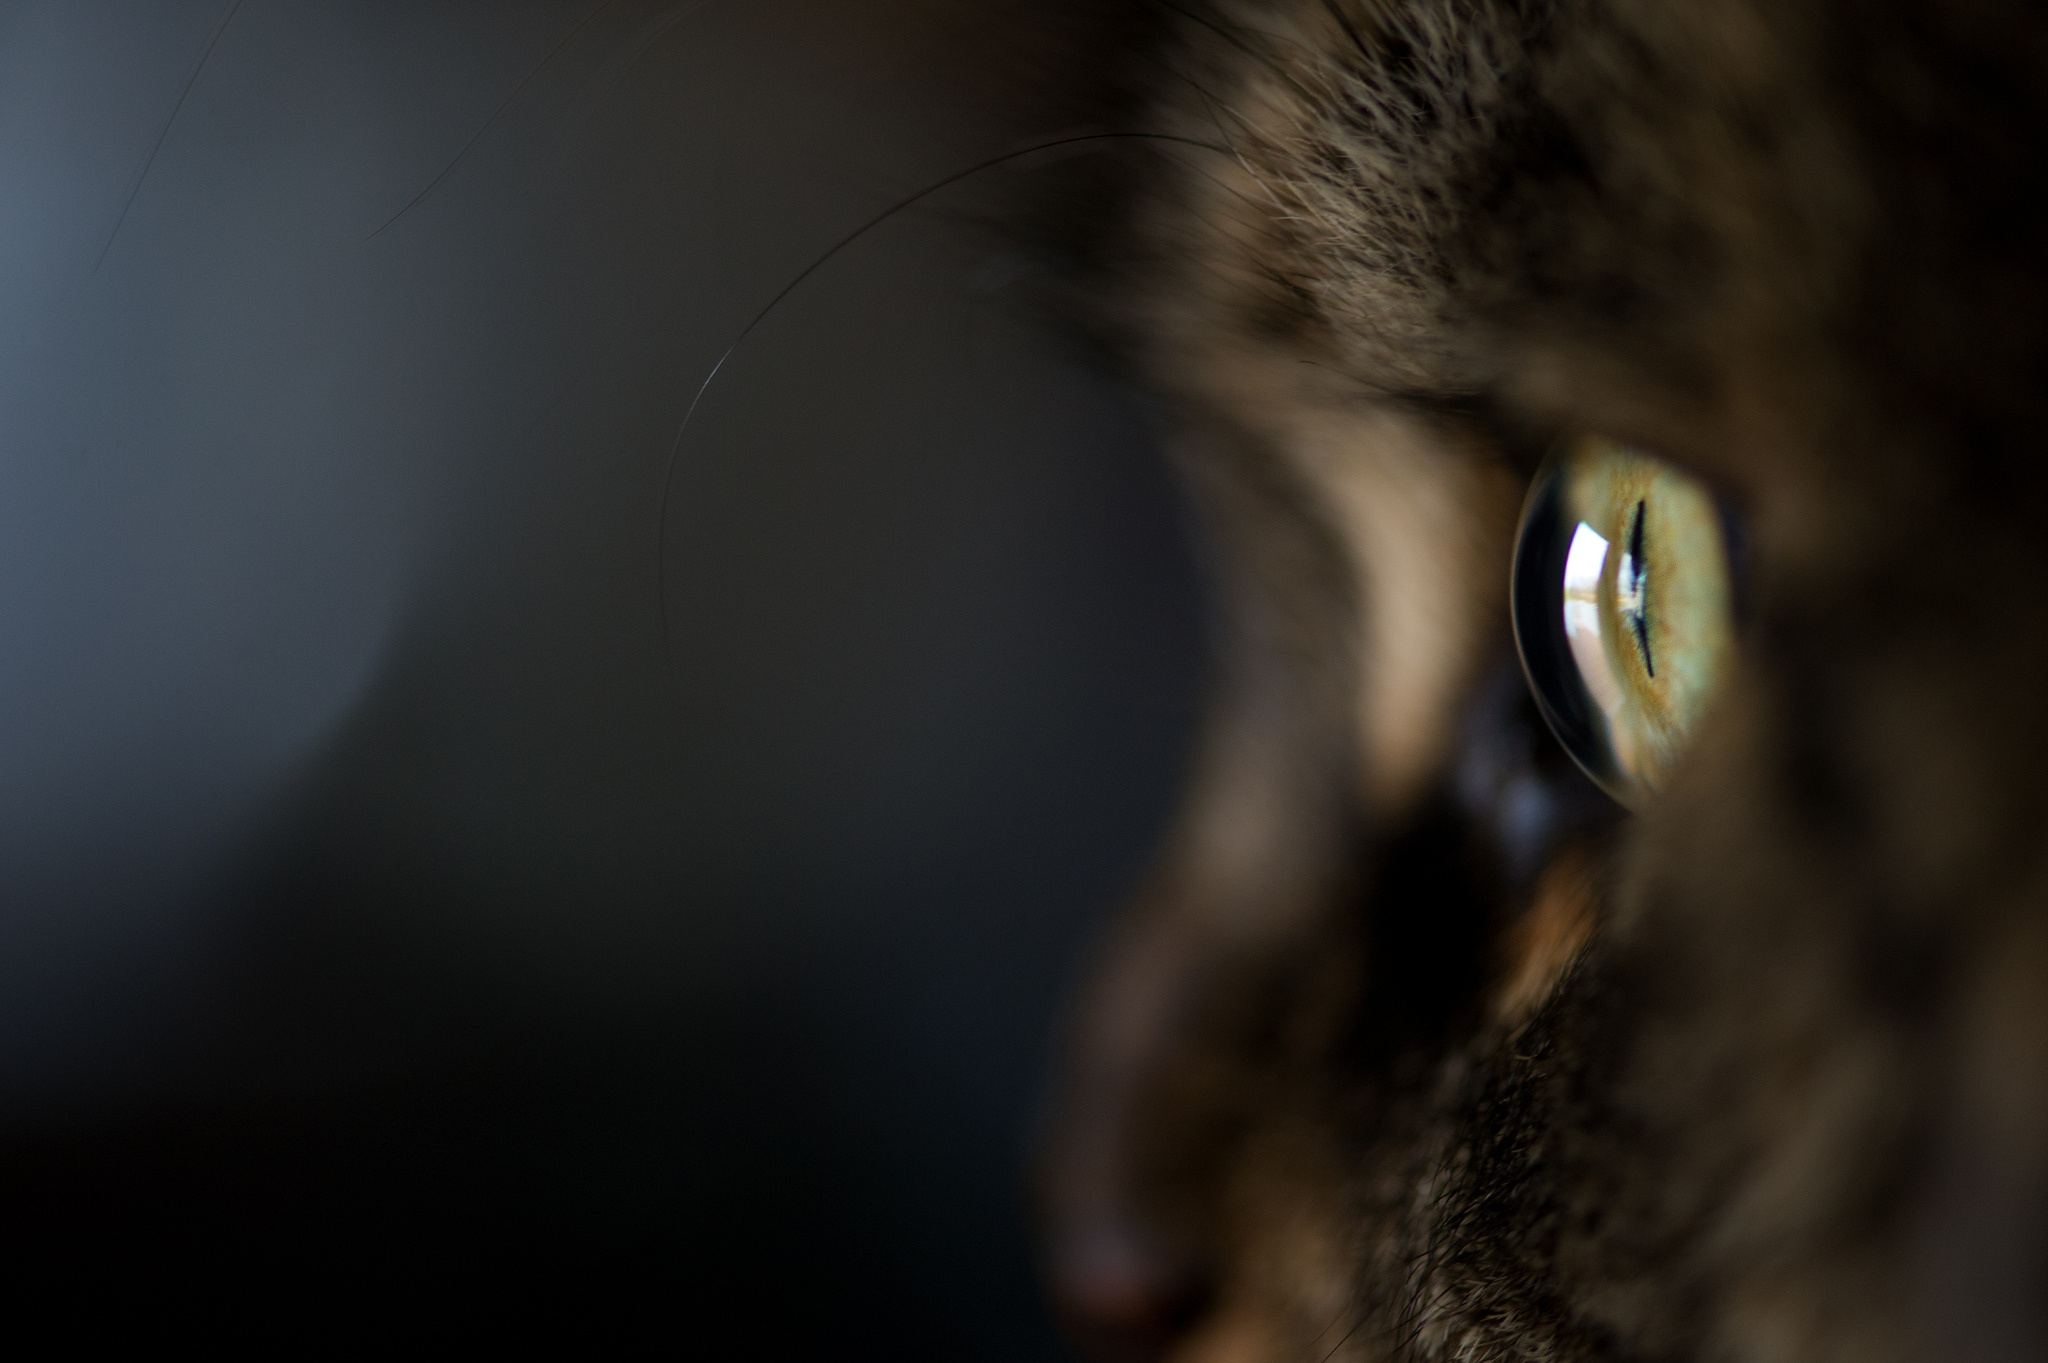 Обои глазки. Глаза кошки. Кошачий глаз. Макросъемка глаза кошки. Взгляд кошки.